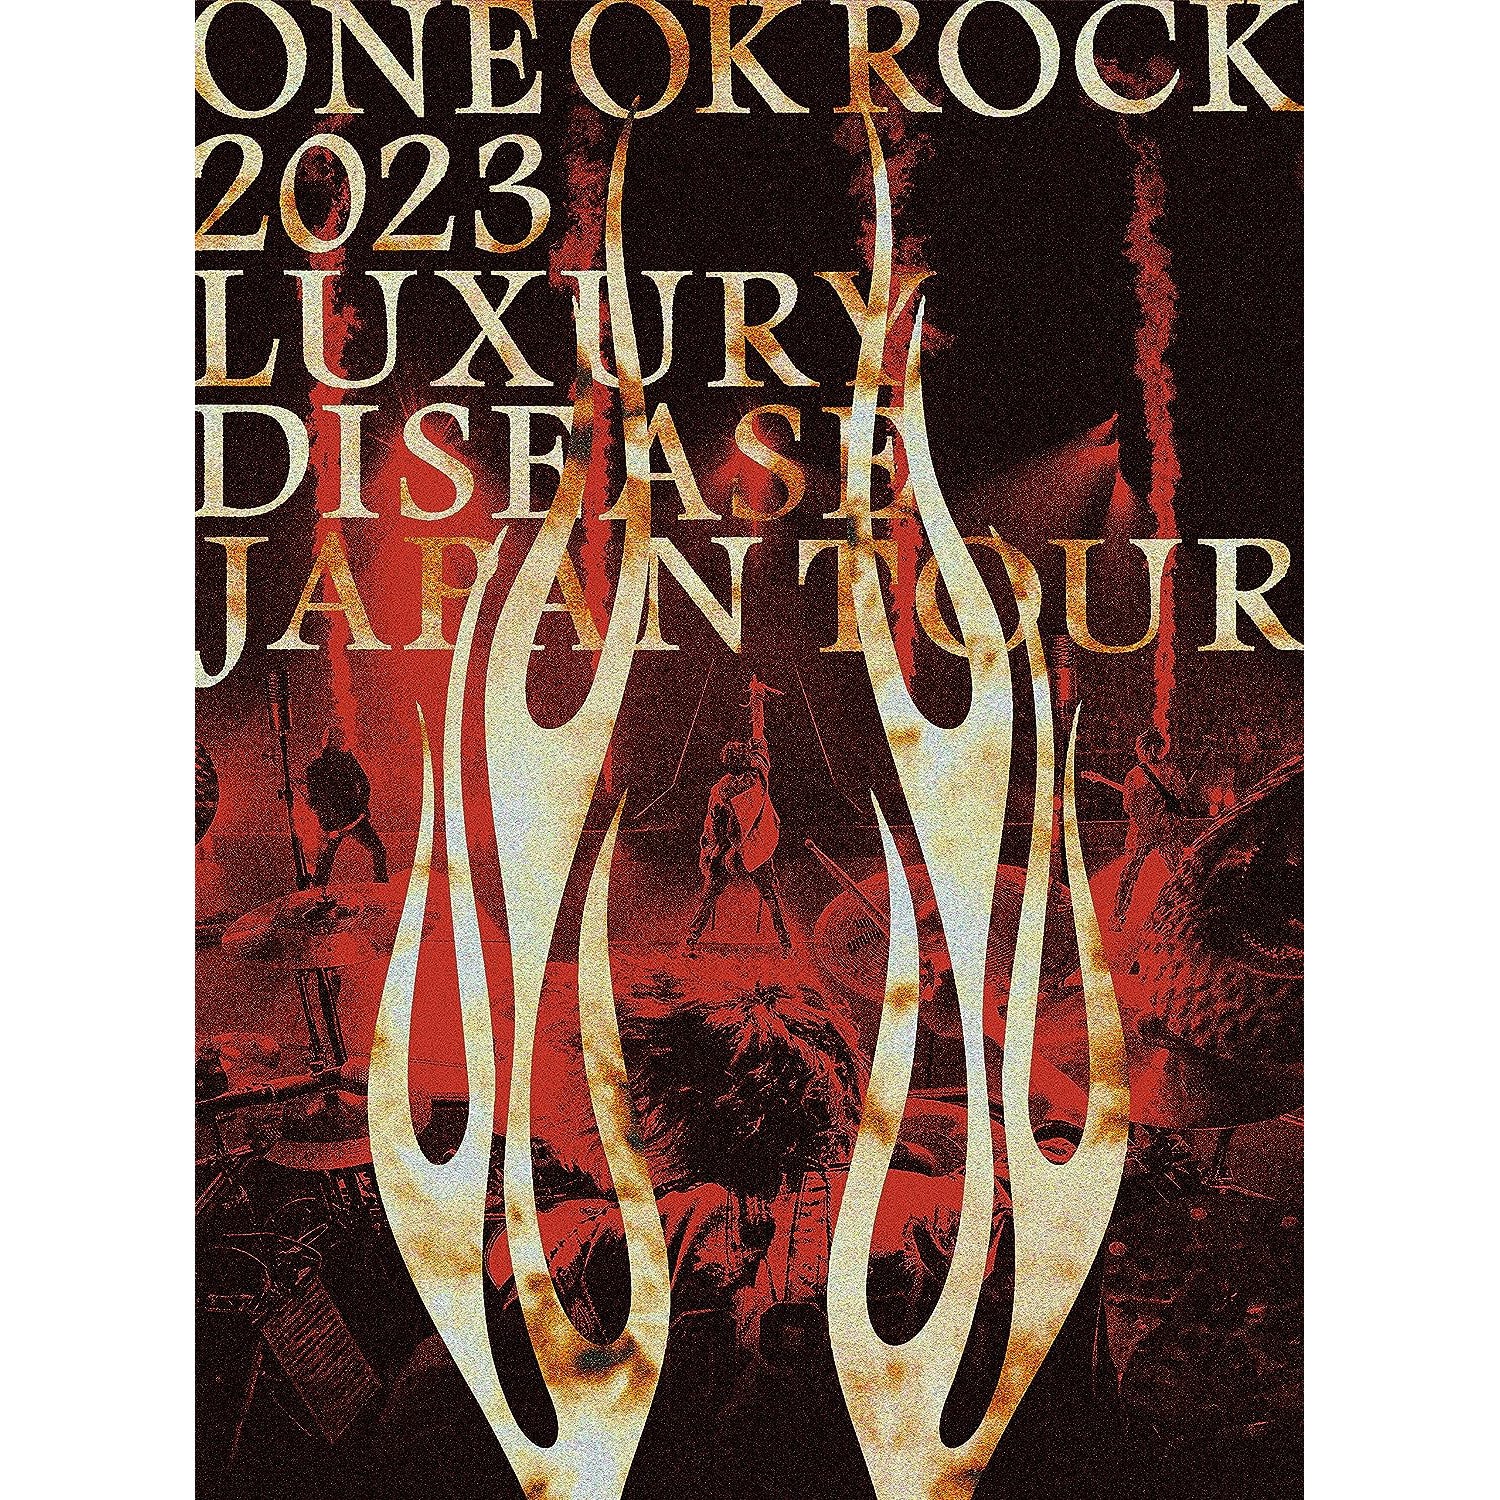 ONE OK ROCK Live Blu-ray《ONE OK ROCK 2023 LUXURY DISEASE JAPAN 